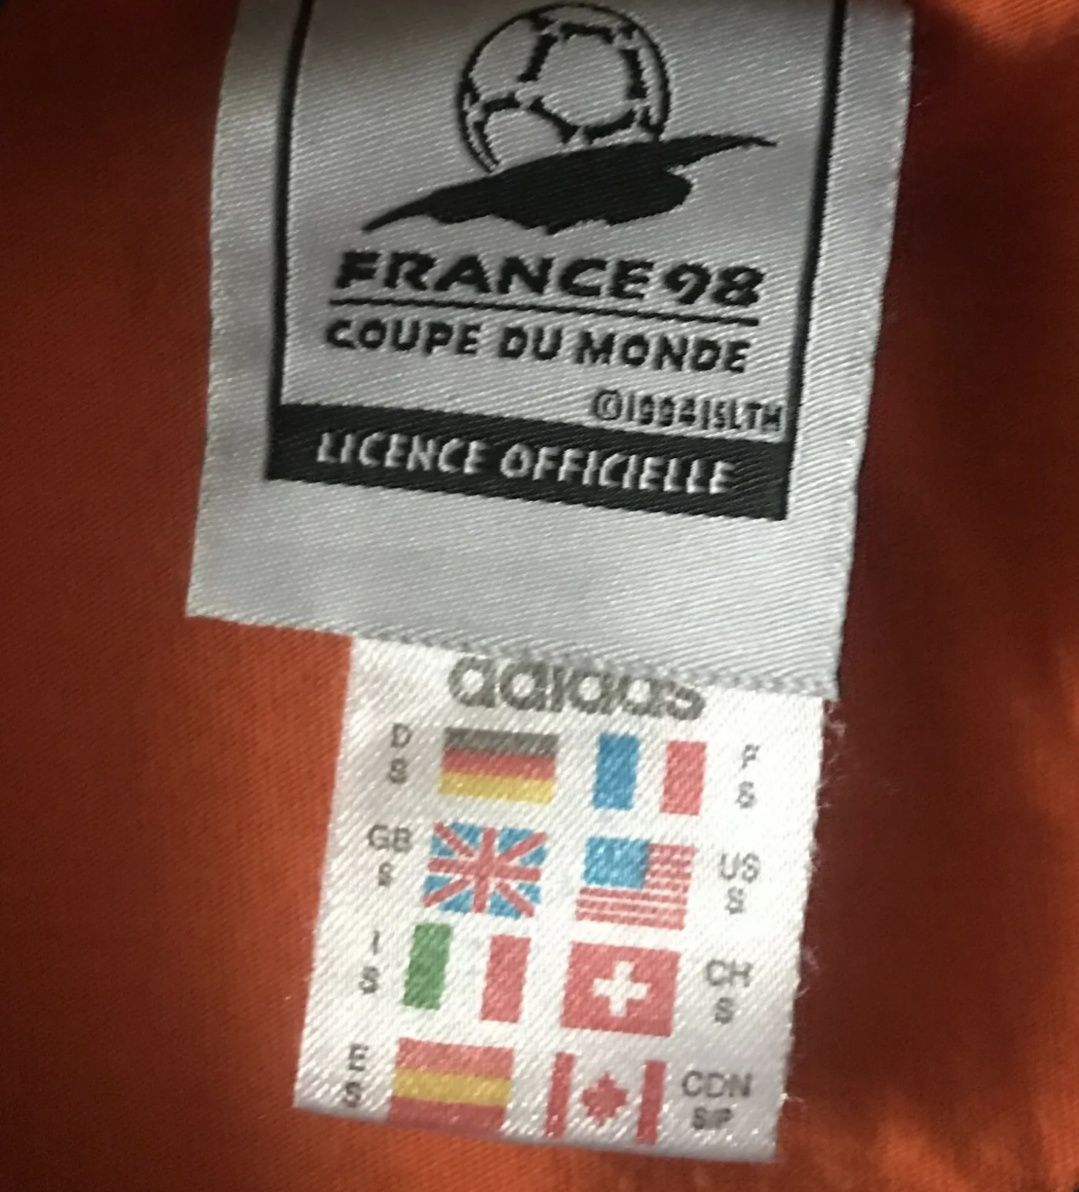 Holandia Netherlands World Cup 1998 adidas vintage tshirt